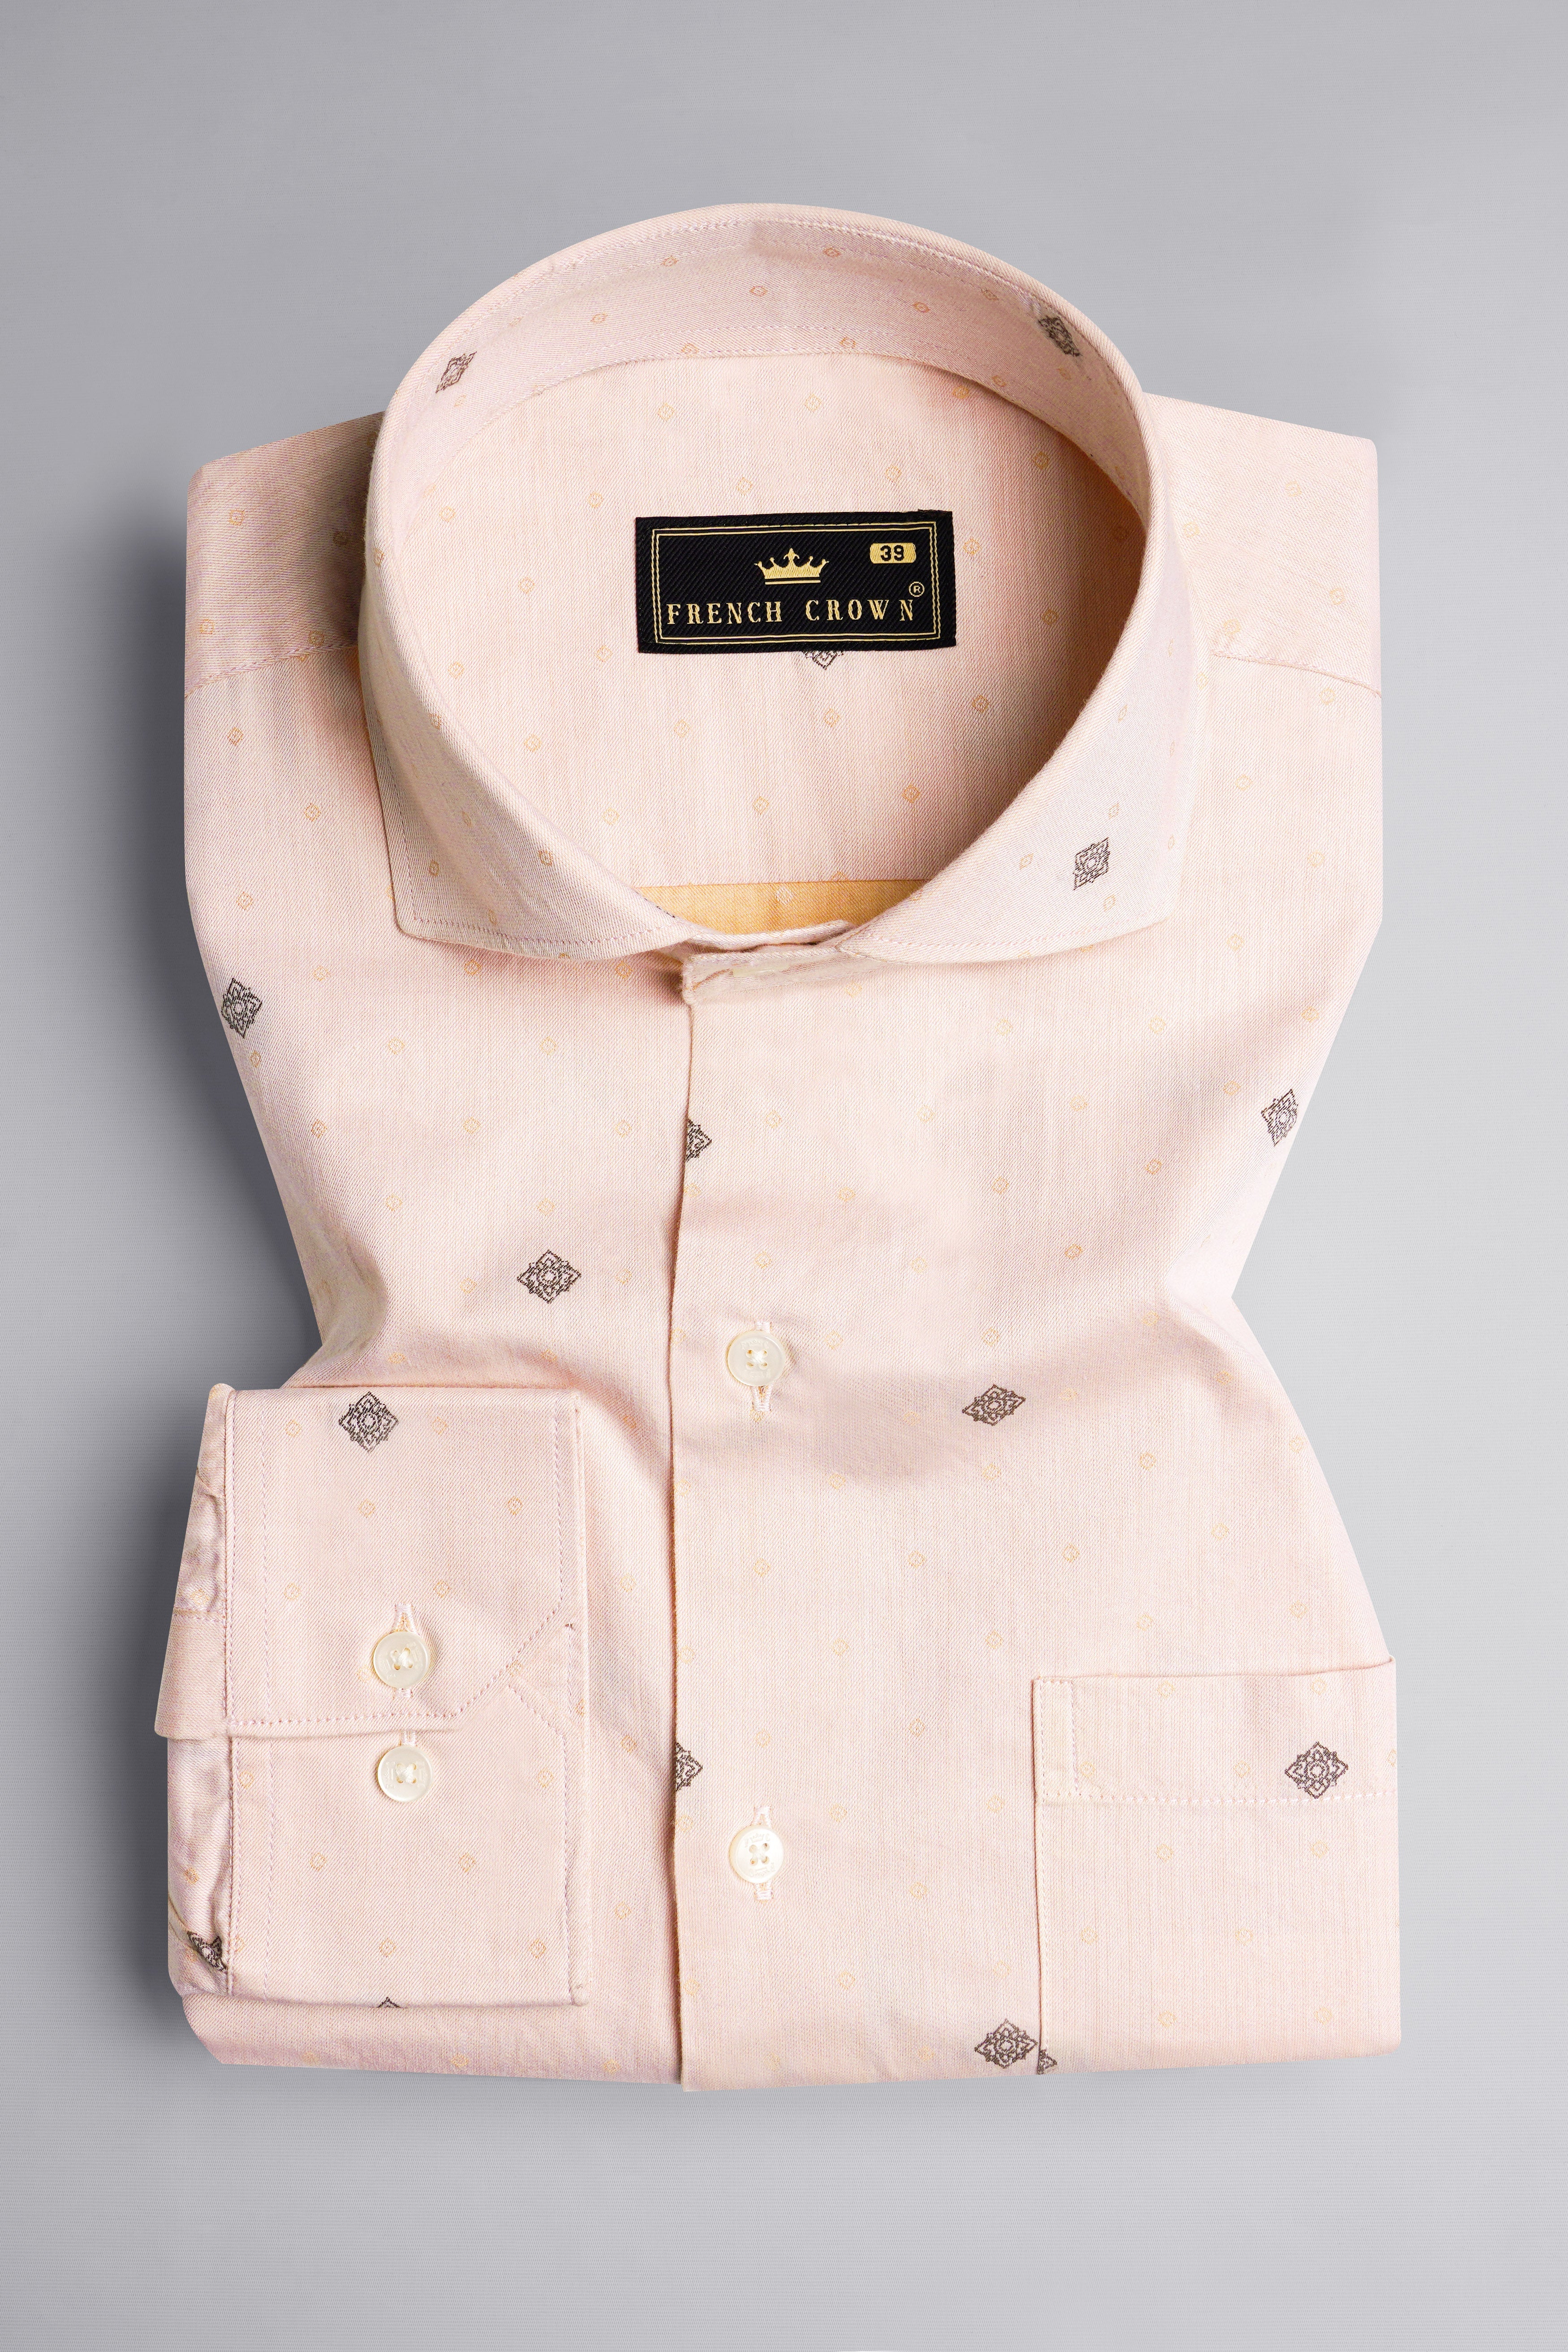 Soft Amber Peach with Pine Cone Brown Jacquard Textured Premium Giza Cotton Shirt